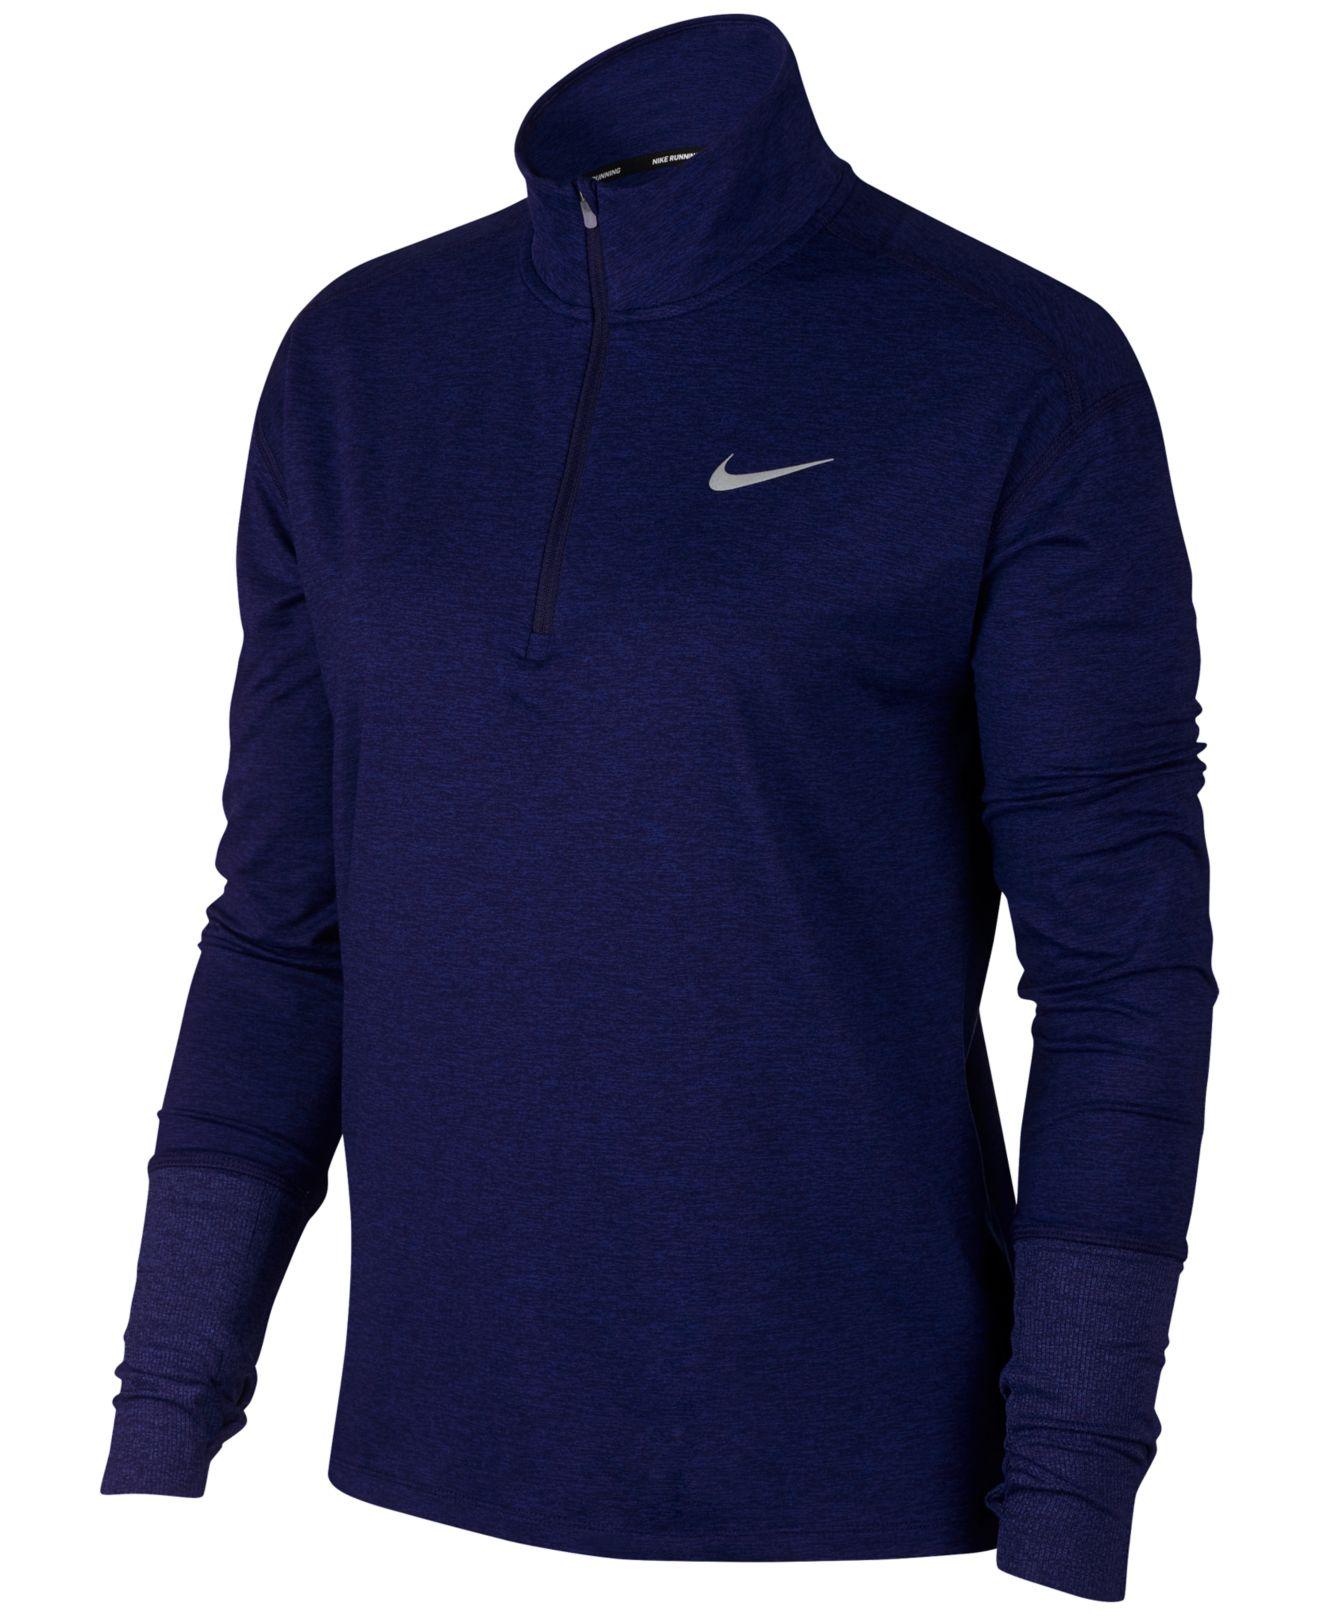 Lyst - Nike Element Dry Half-zip Running Top in Blue